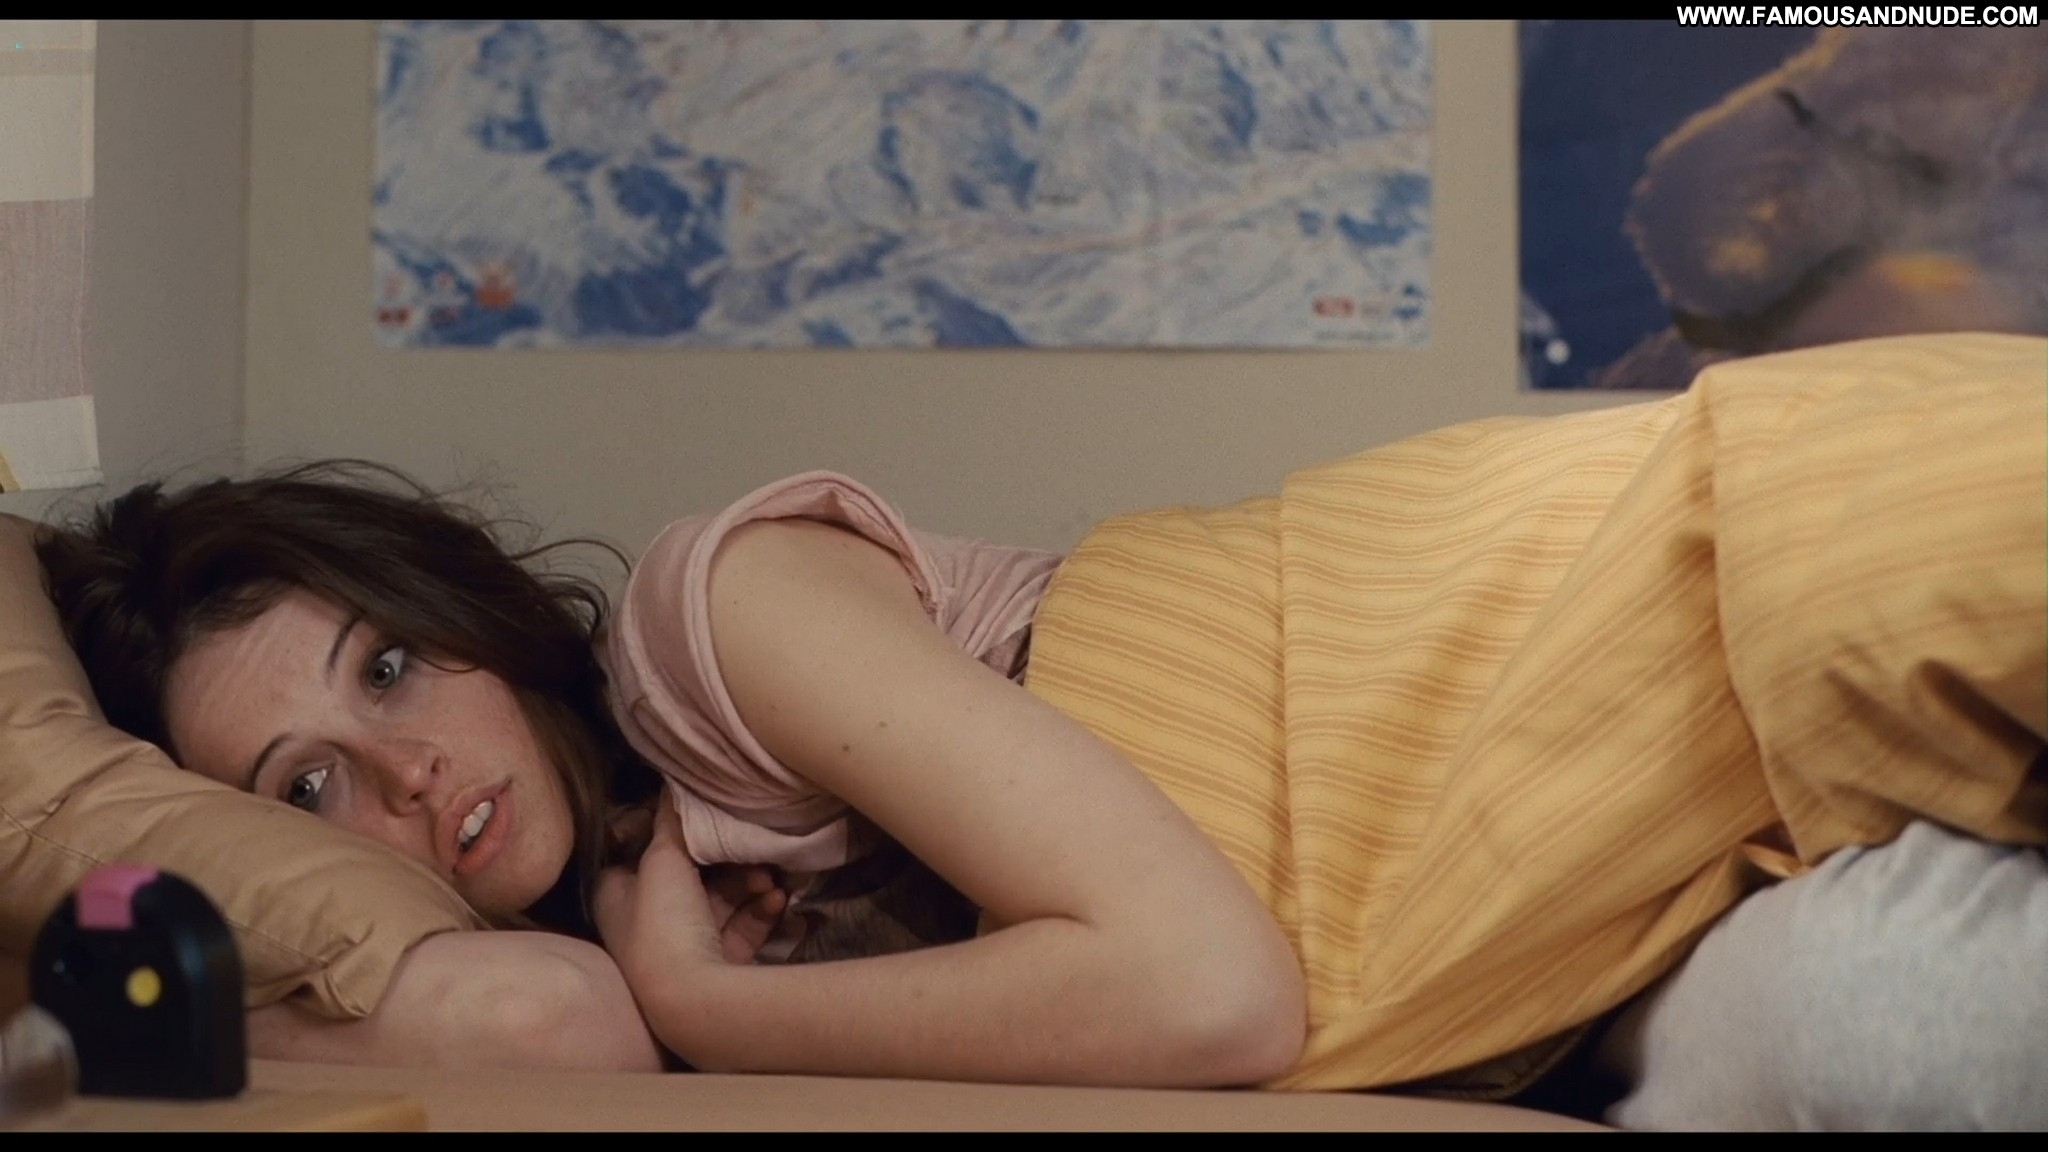 Felicity jones nude (covered) chalet girl (2011) hd 1080p watch online /  фелисити джонс как выйти замуж за миллиардера watch online